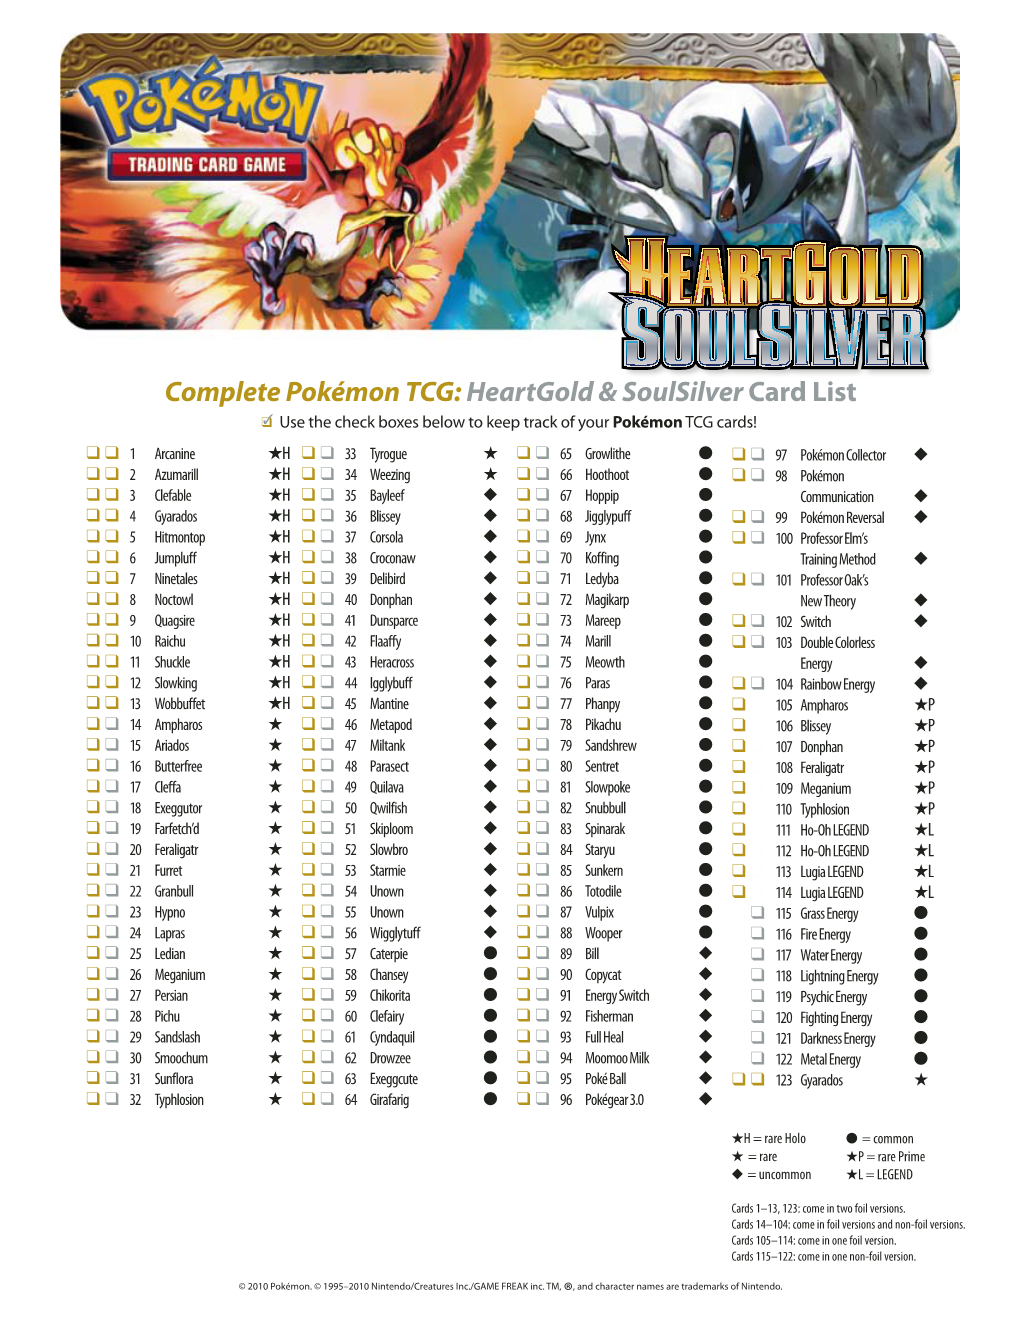 Complete Pokémon TCG:Heartgold & Soulsilver Card List